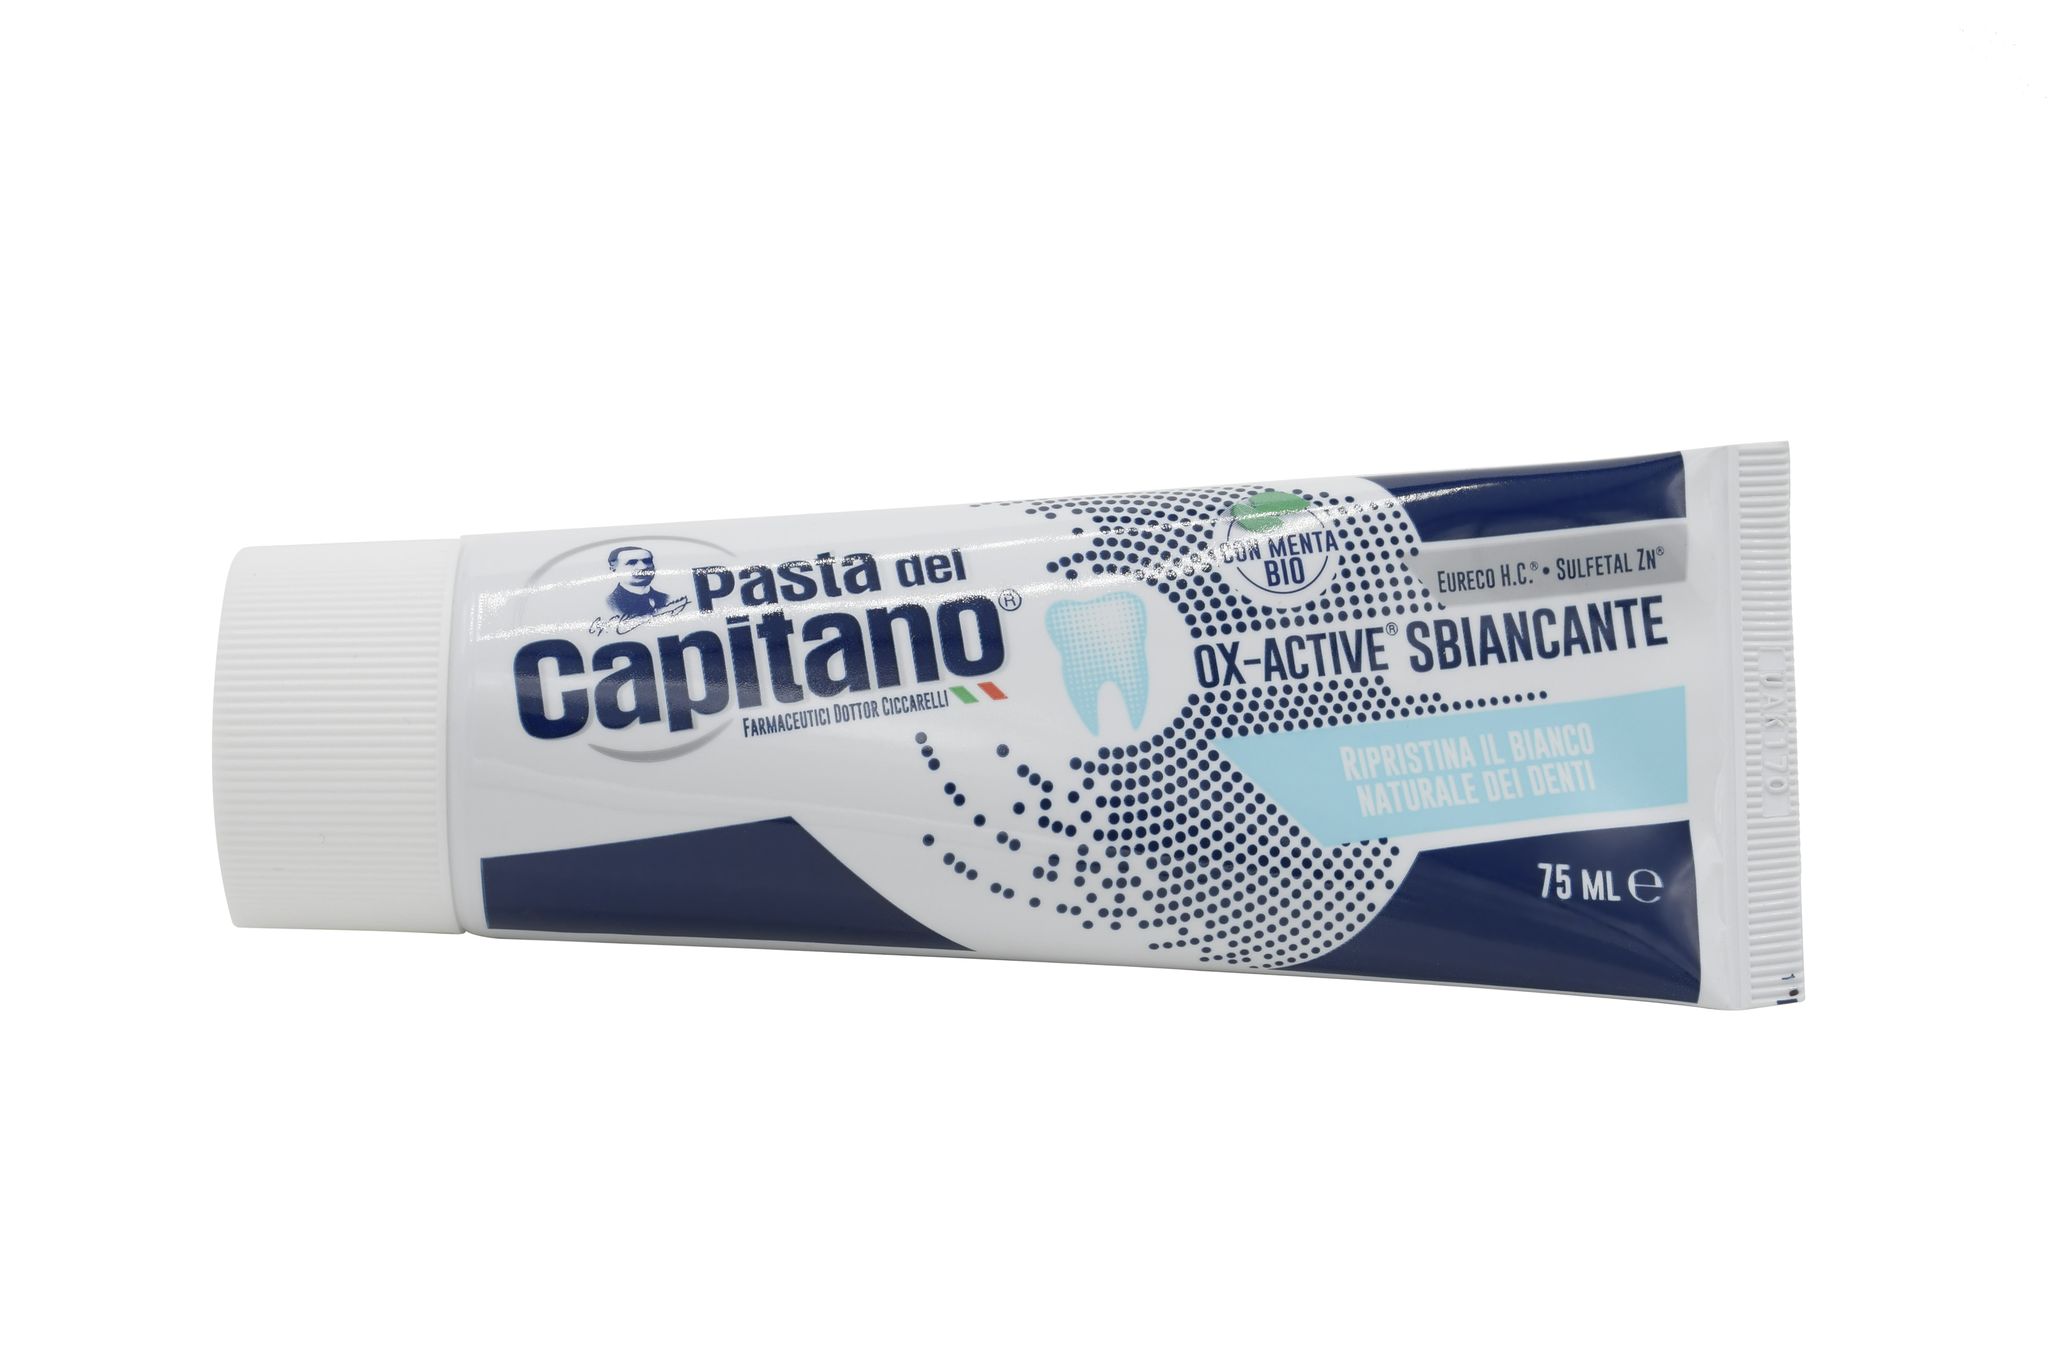 Ox-Active Whitening Toothpaste, 75 ml